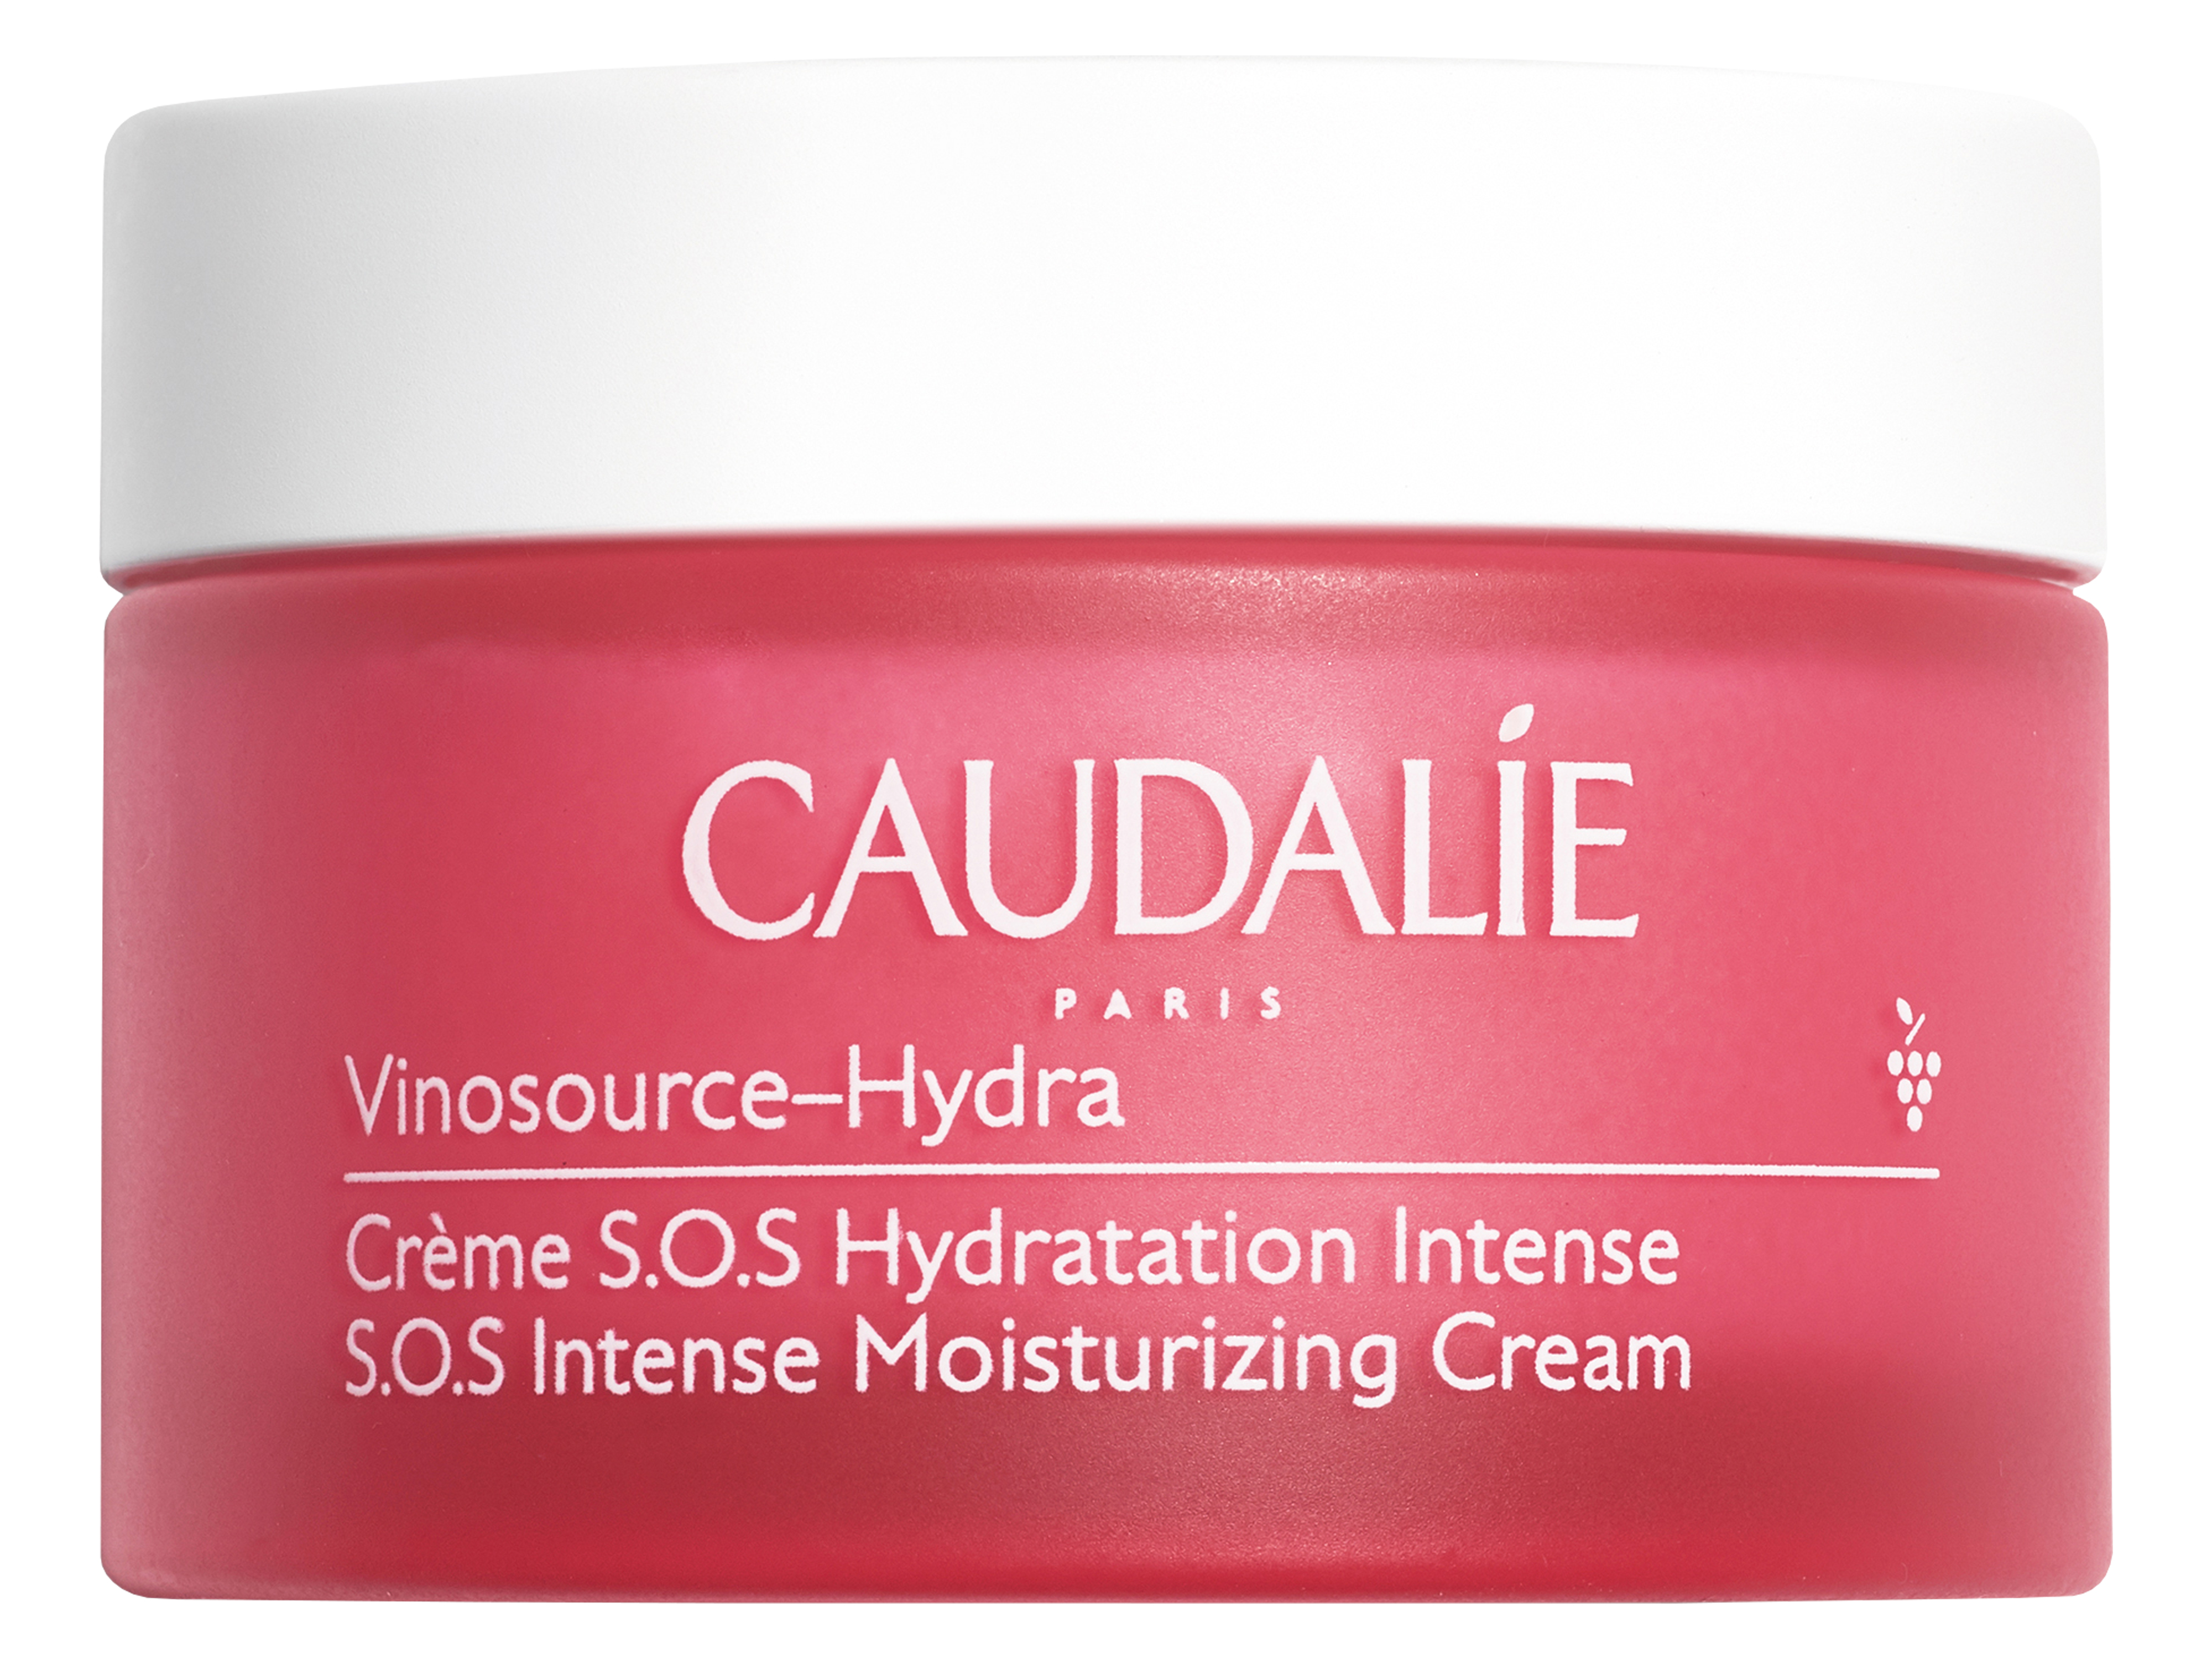 Caudalie Vinosource-Hydra S.O.S Intense Moisturizing Cream, 50 ml